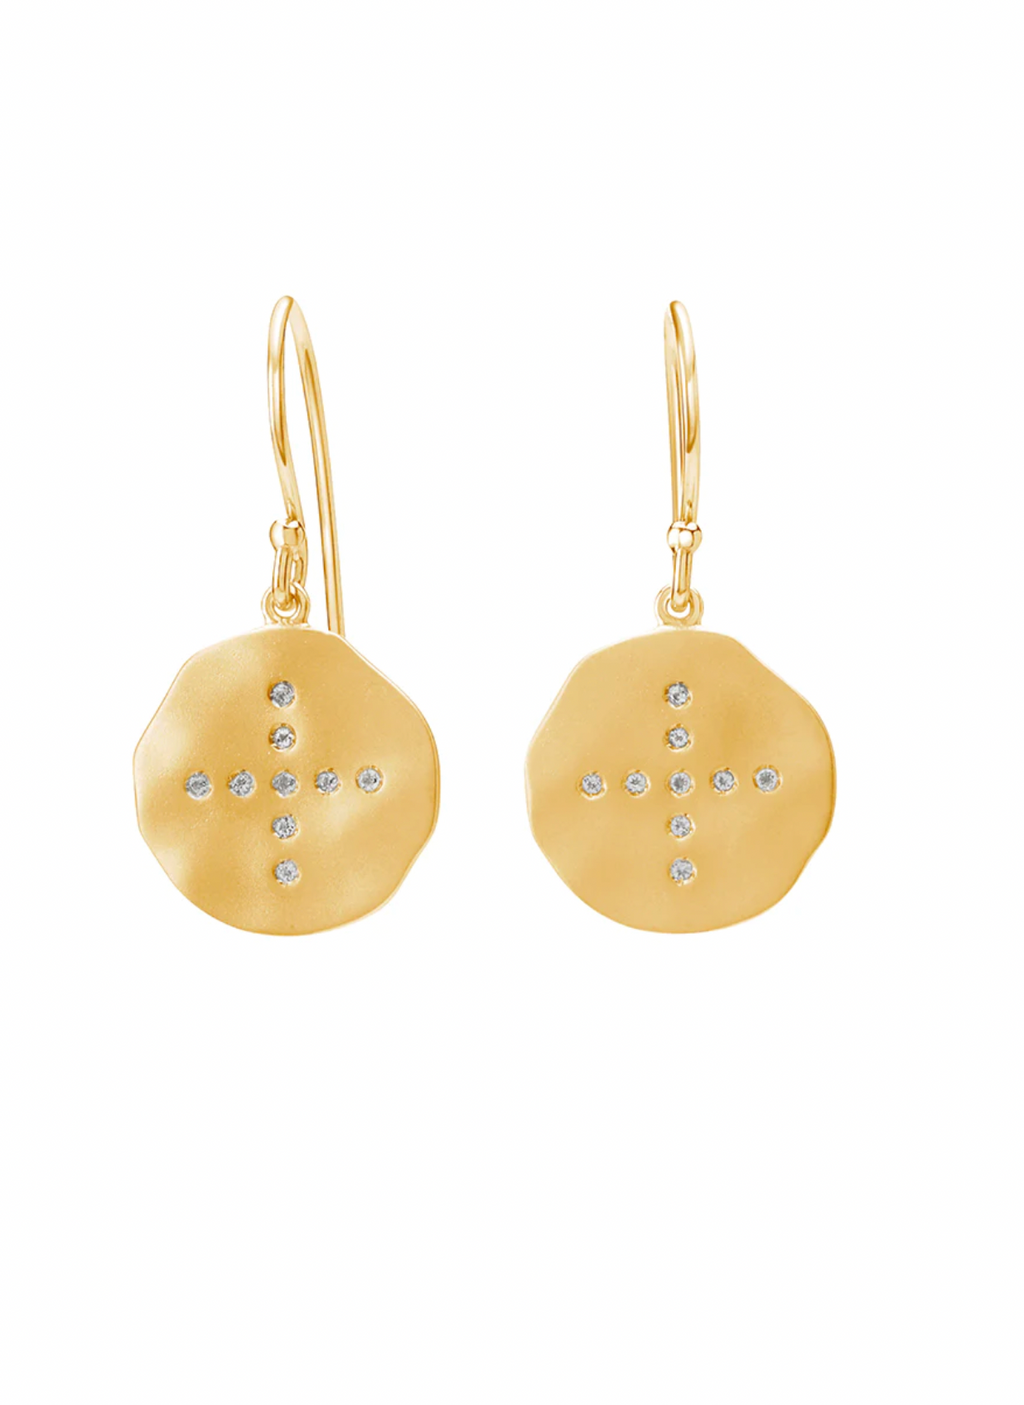 18 Karat yellow gold plated earrings with semi precious stone white topaz by murkani